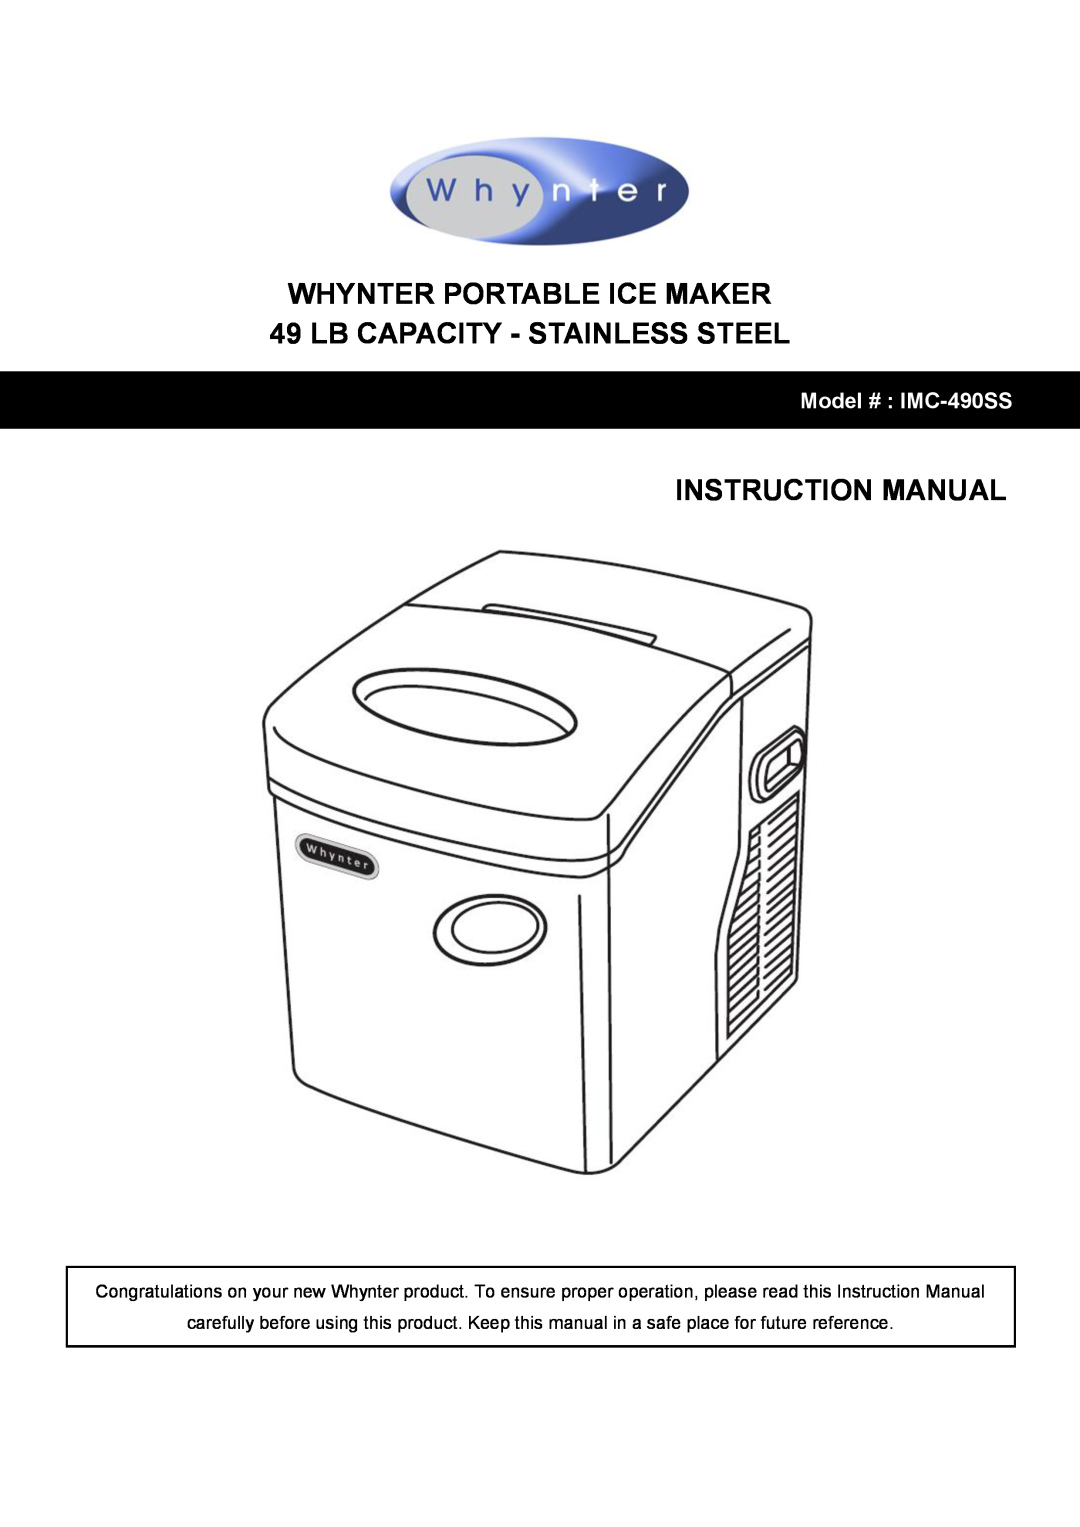 Whynter #:IMC490SS instruction manual WHYNTER PORTABLE ICE MAKER 49 LB CAPACITY - STAINLESS STEEL, Model # IMC-490SS 